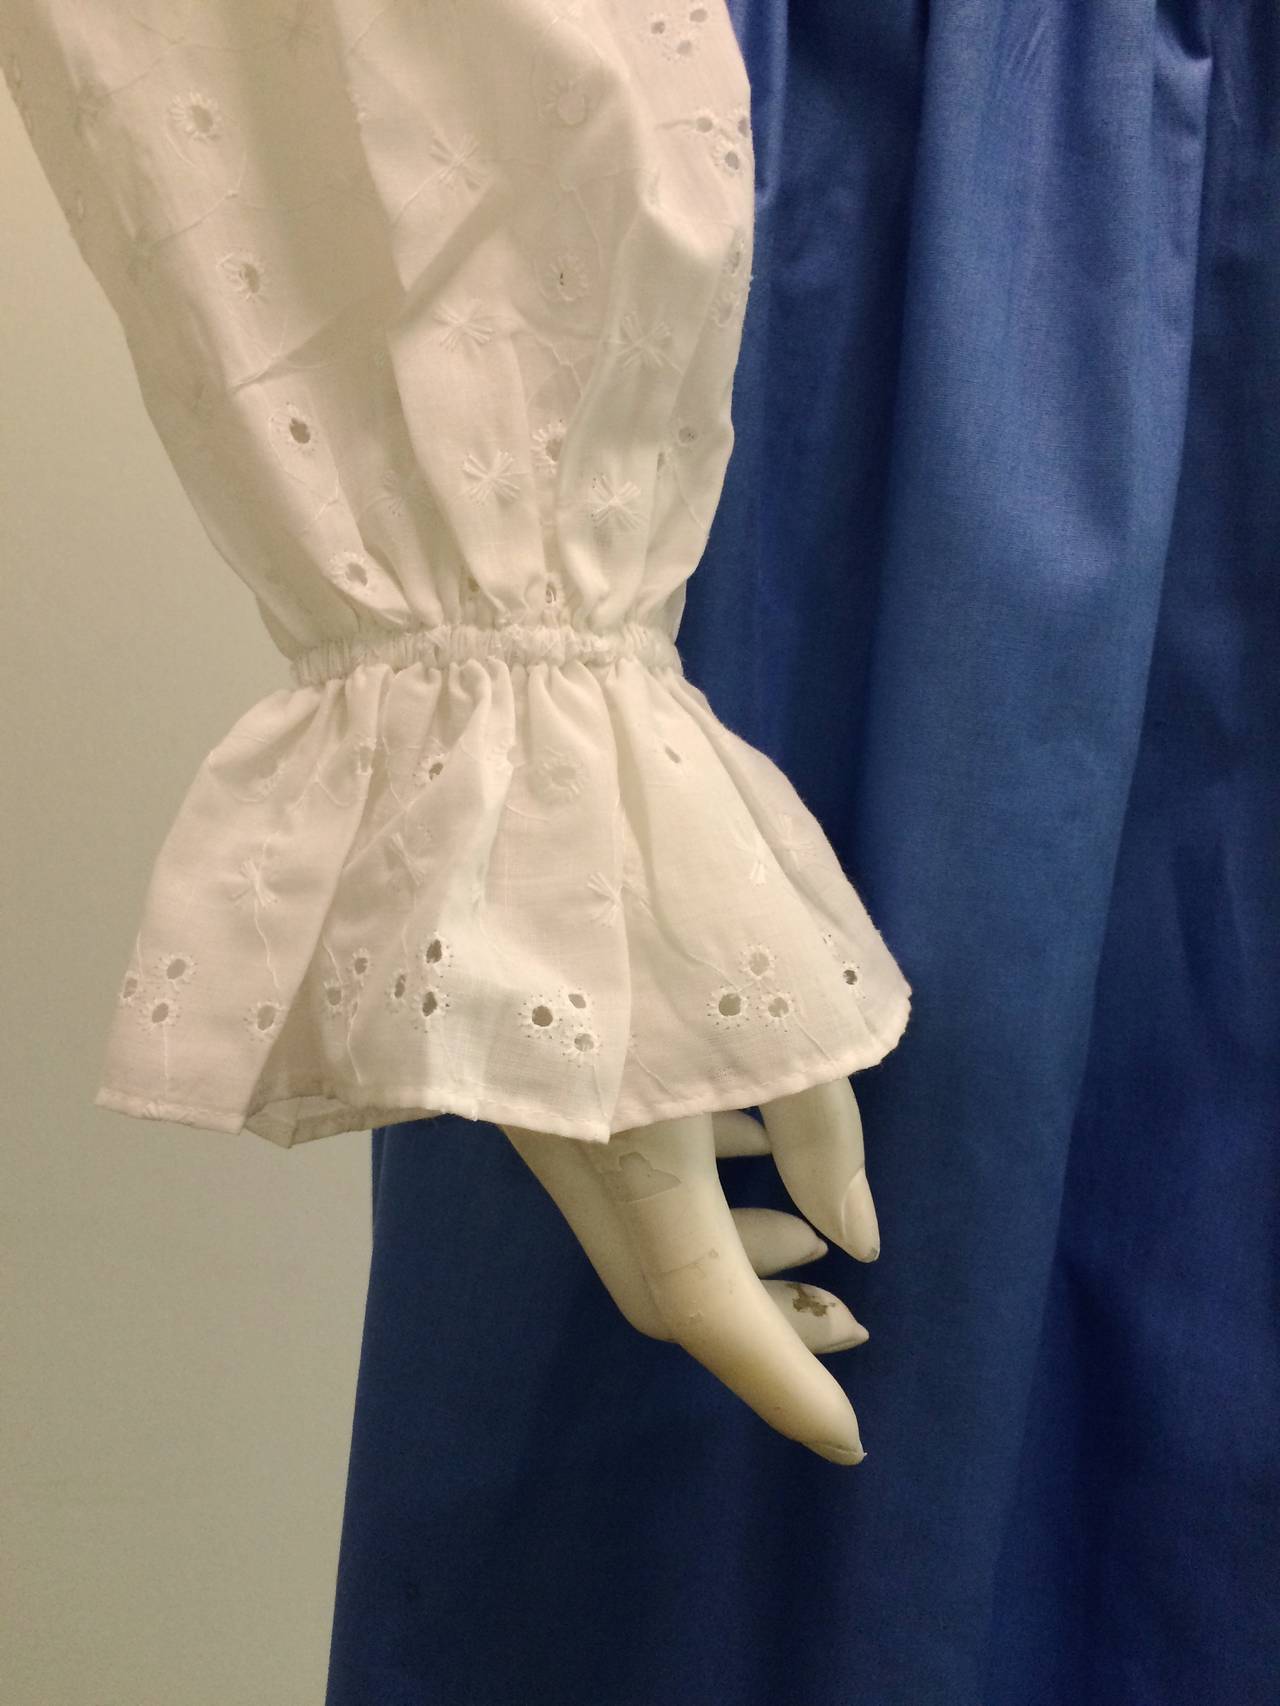 Women's Bill Blass for I.Magnin 80s dress with pockets & belt size 6/8. For Sale